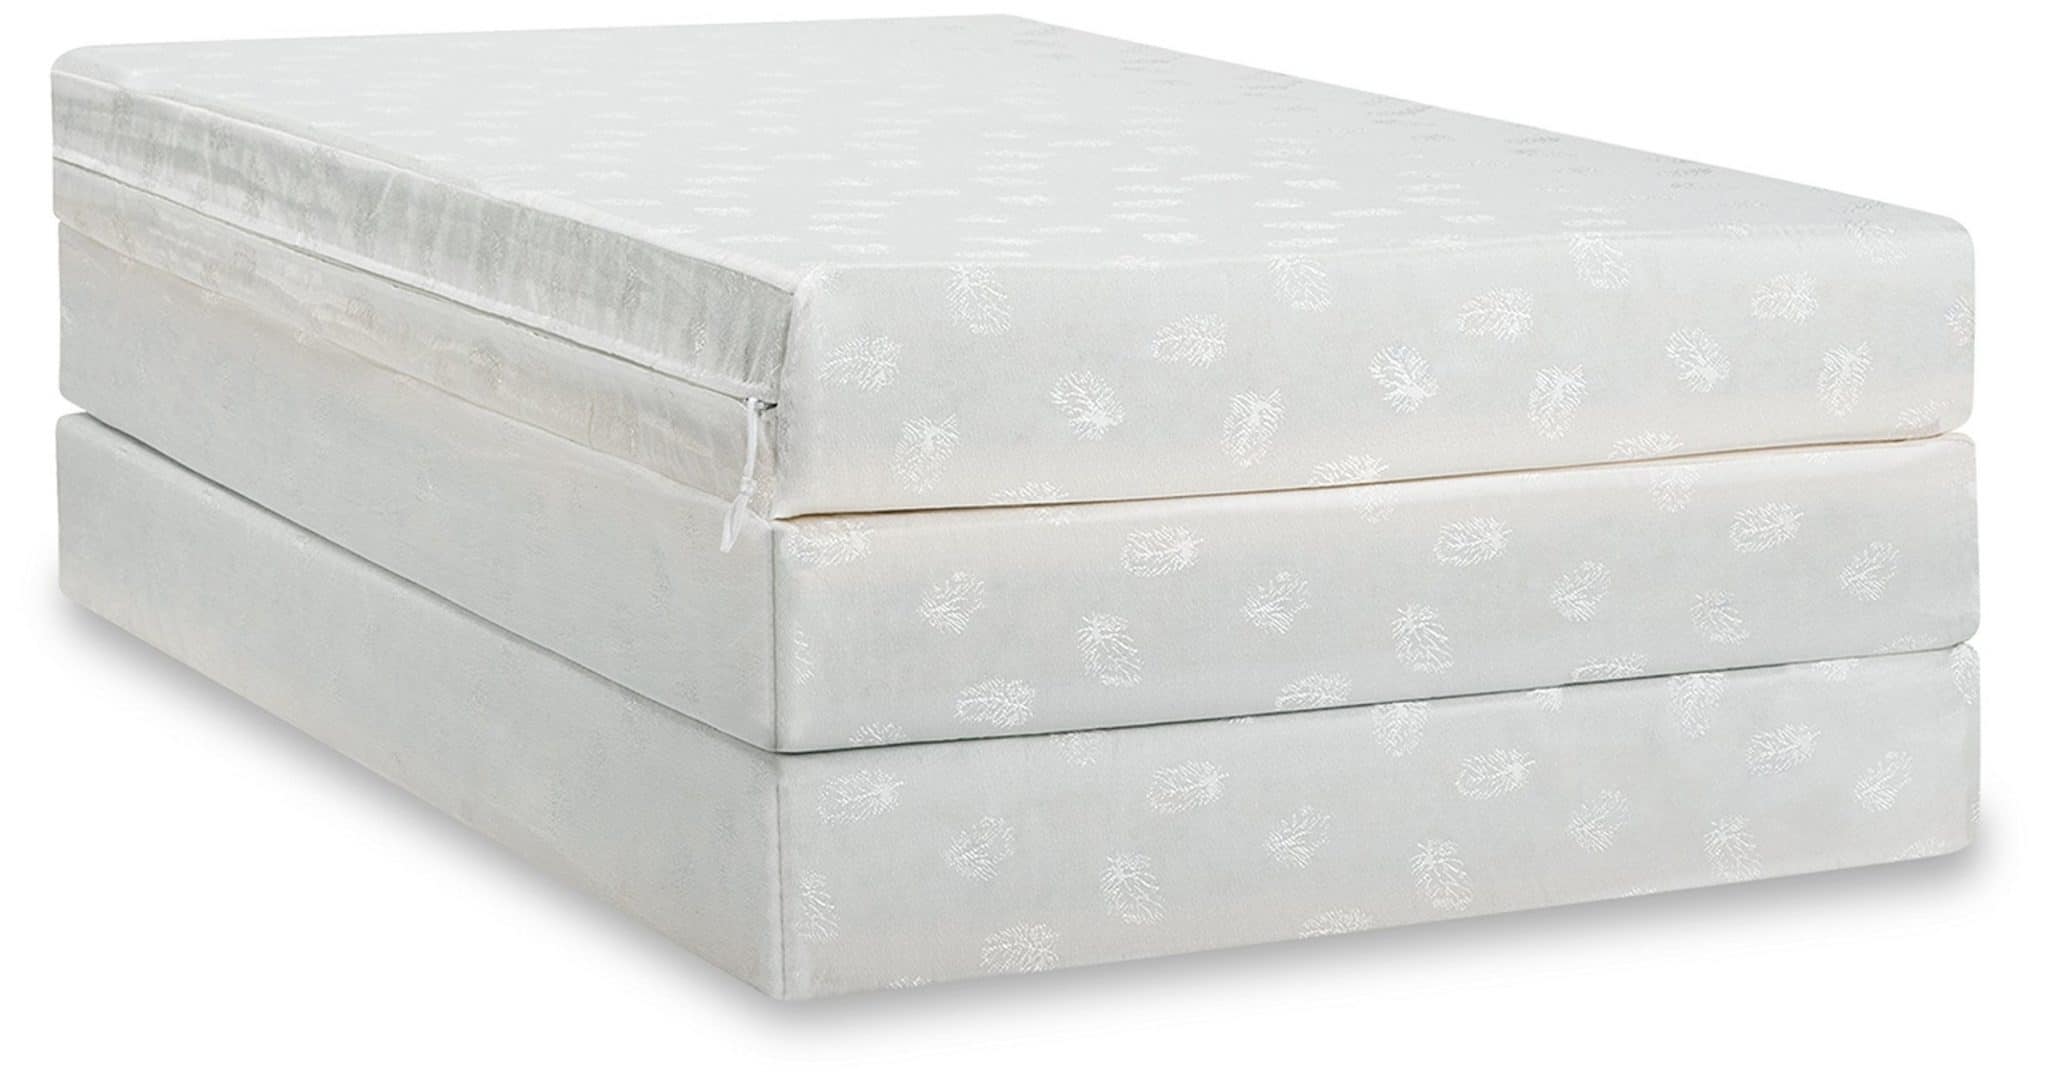 fold a king mattress in half